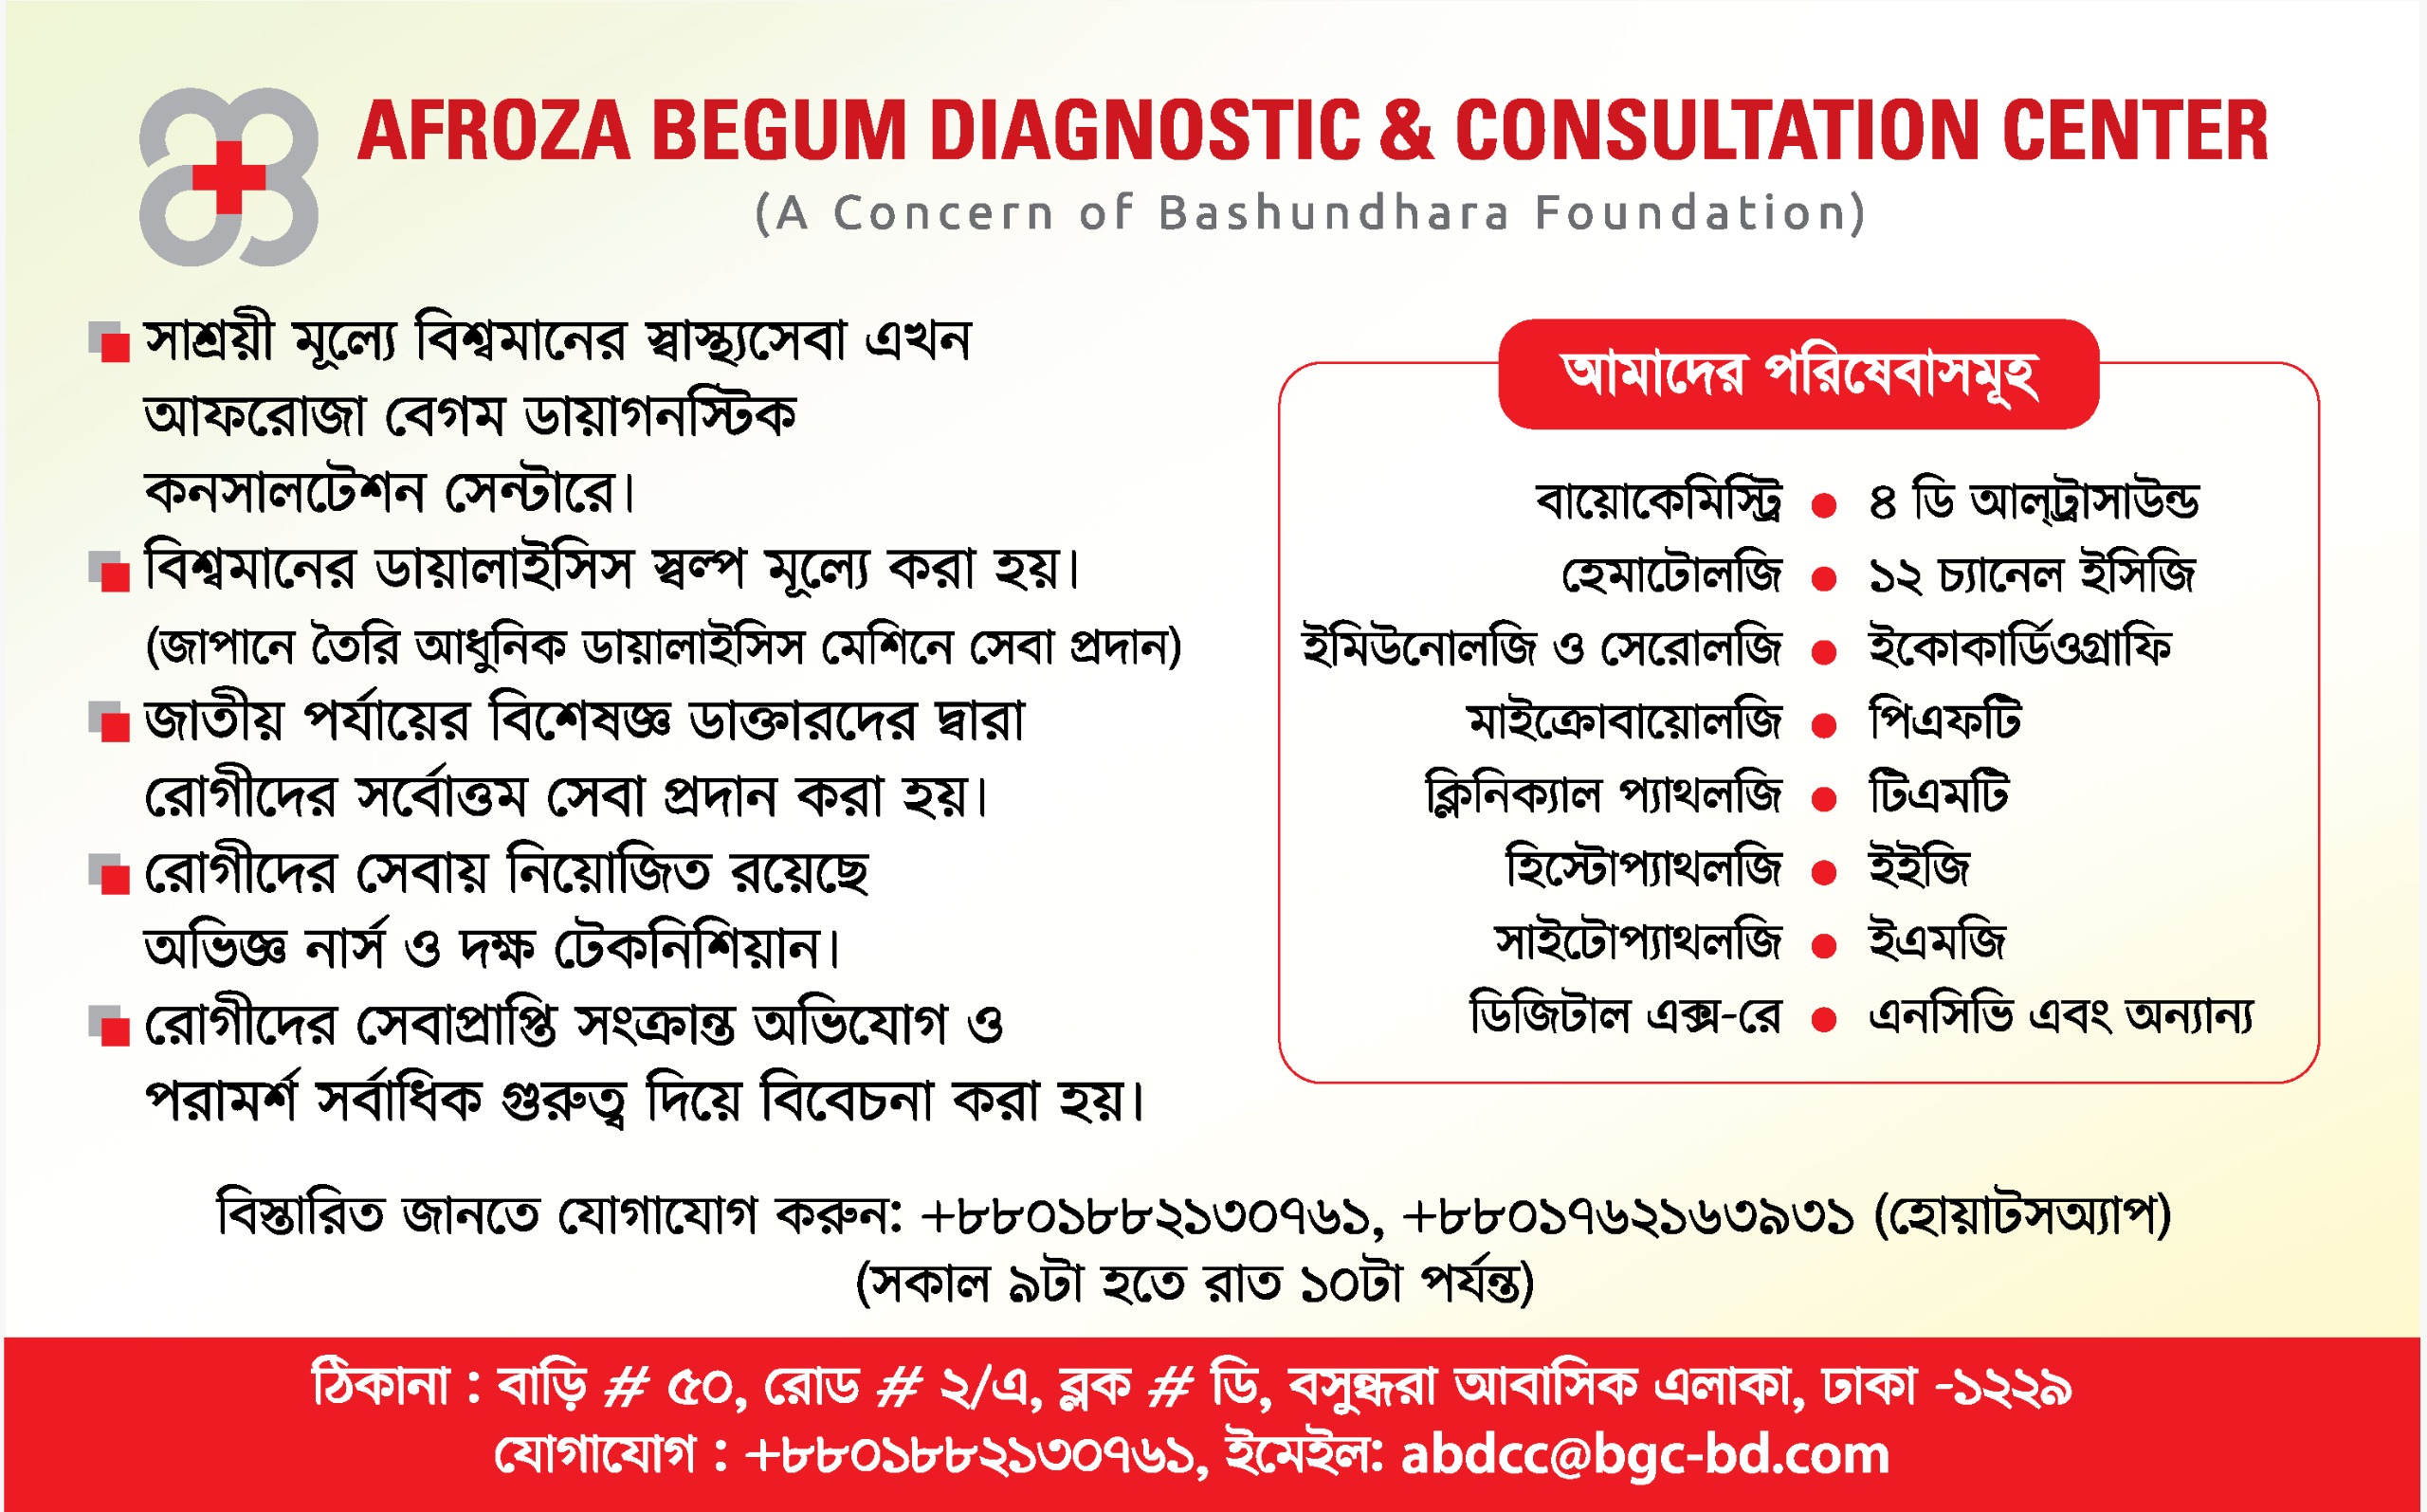 Afroza Begum Diagnostic and Consultation Center